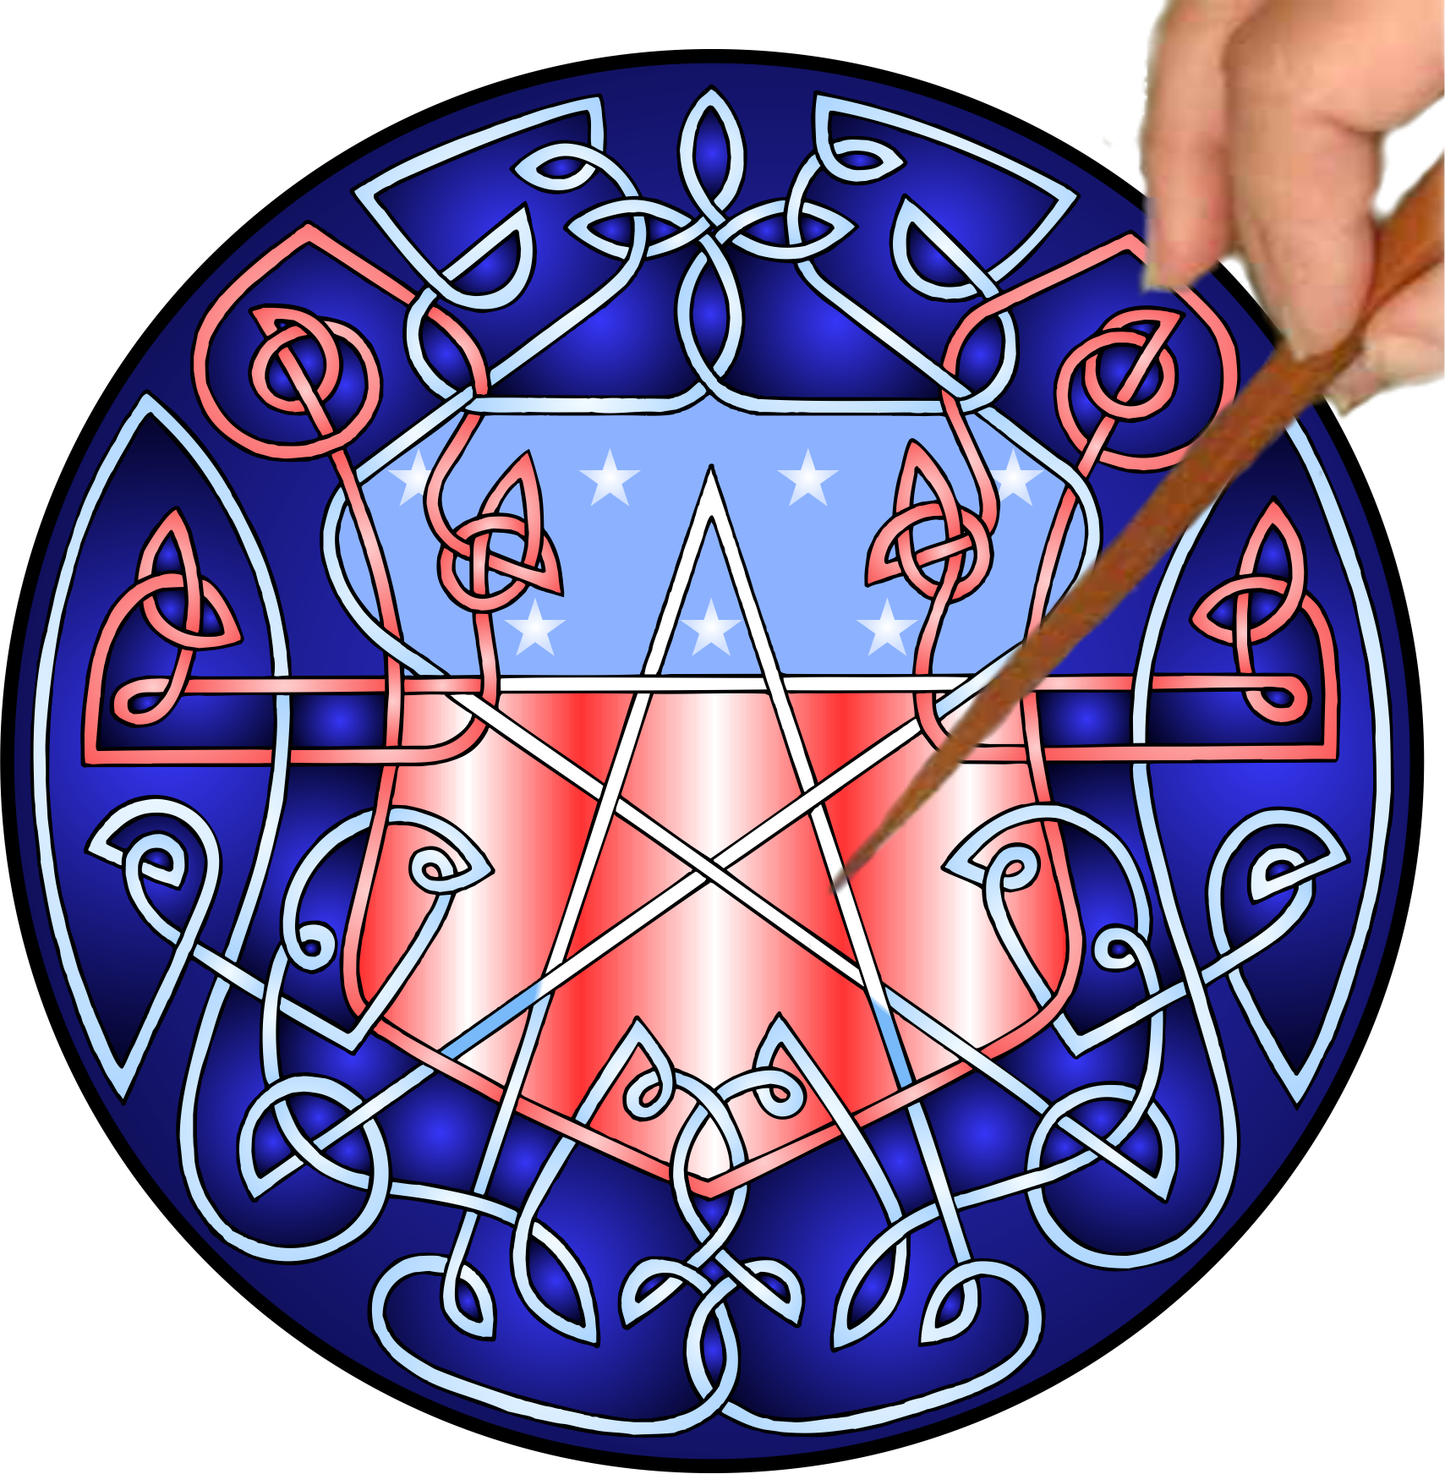 Celtic Star Shield Mandalynth - Mindful Tracing Art